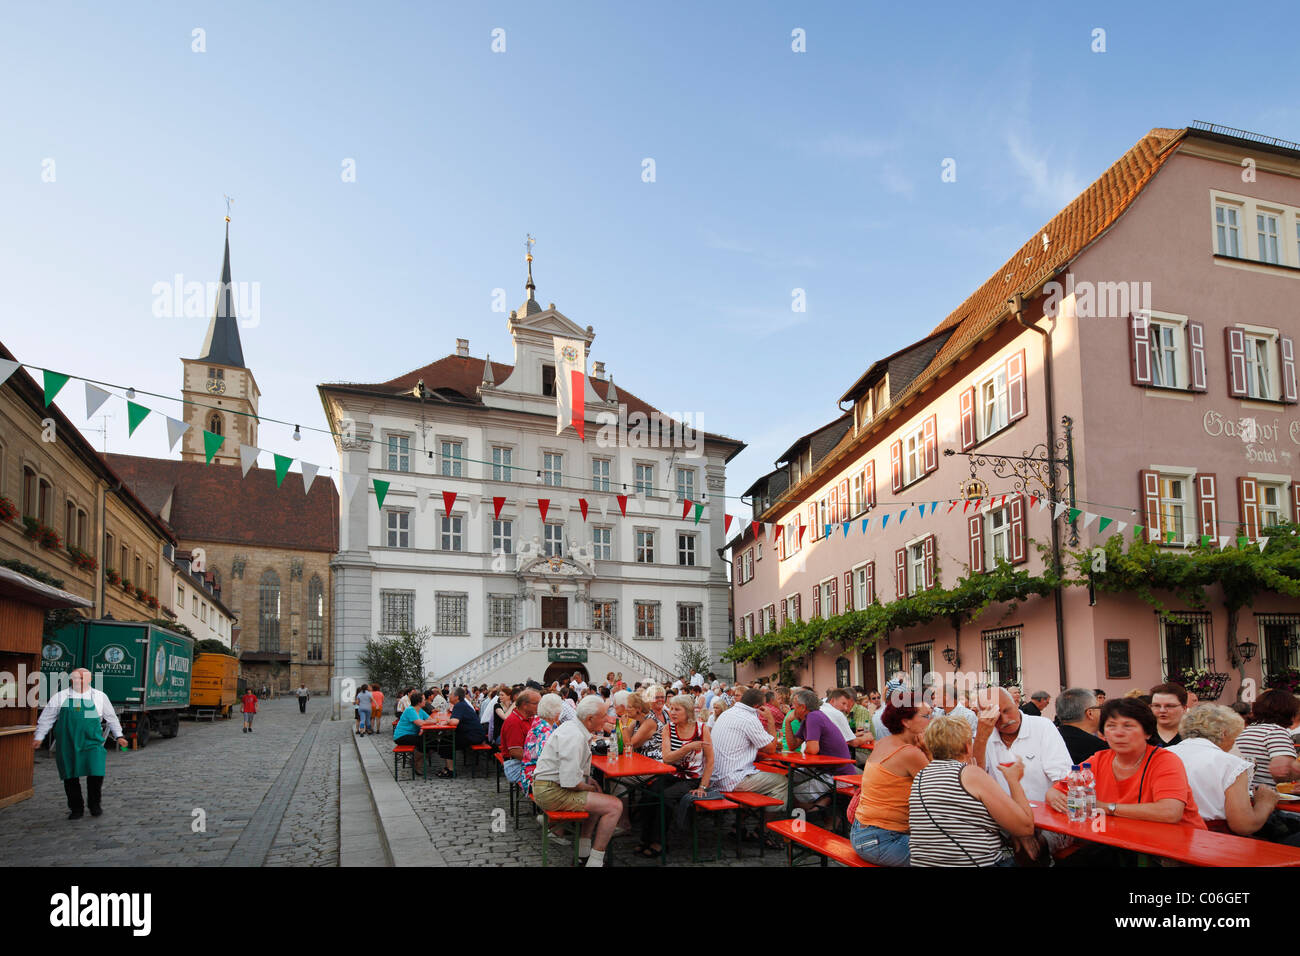 Wine festival, Iphofen, Main-Franconia region, Lower Franconia, Franconia, Bavaria, Germany, Europe Stock Photo